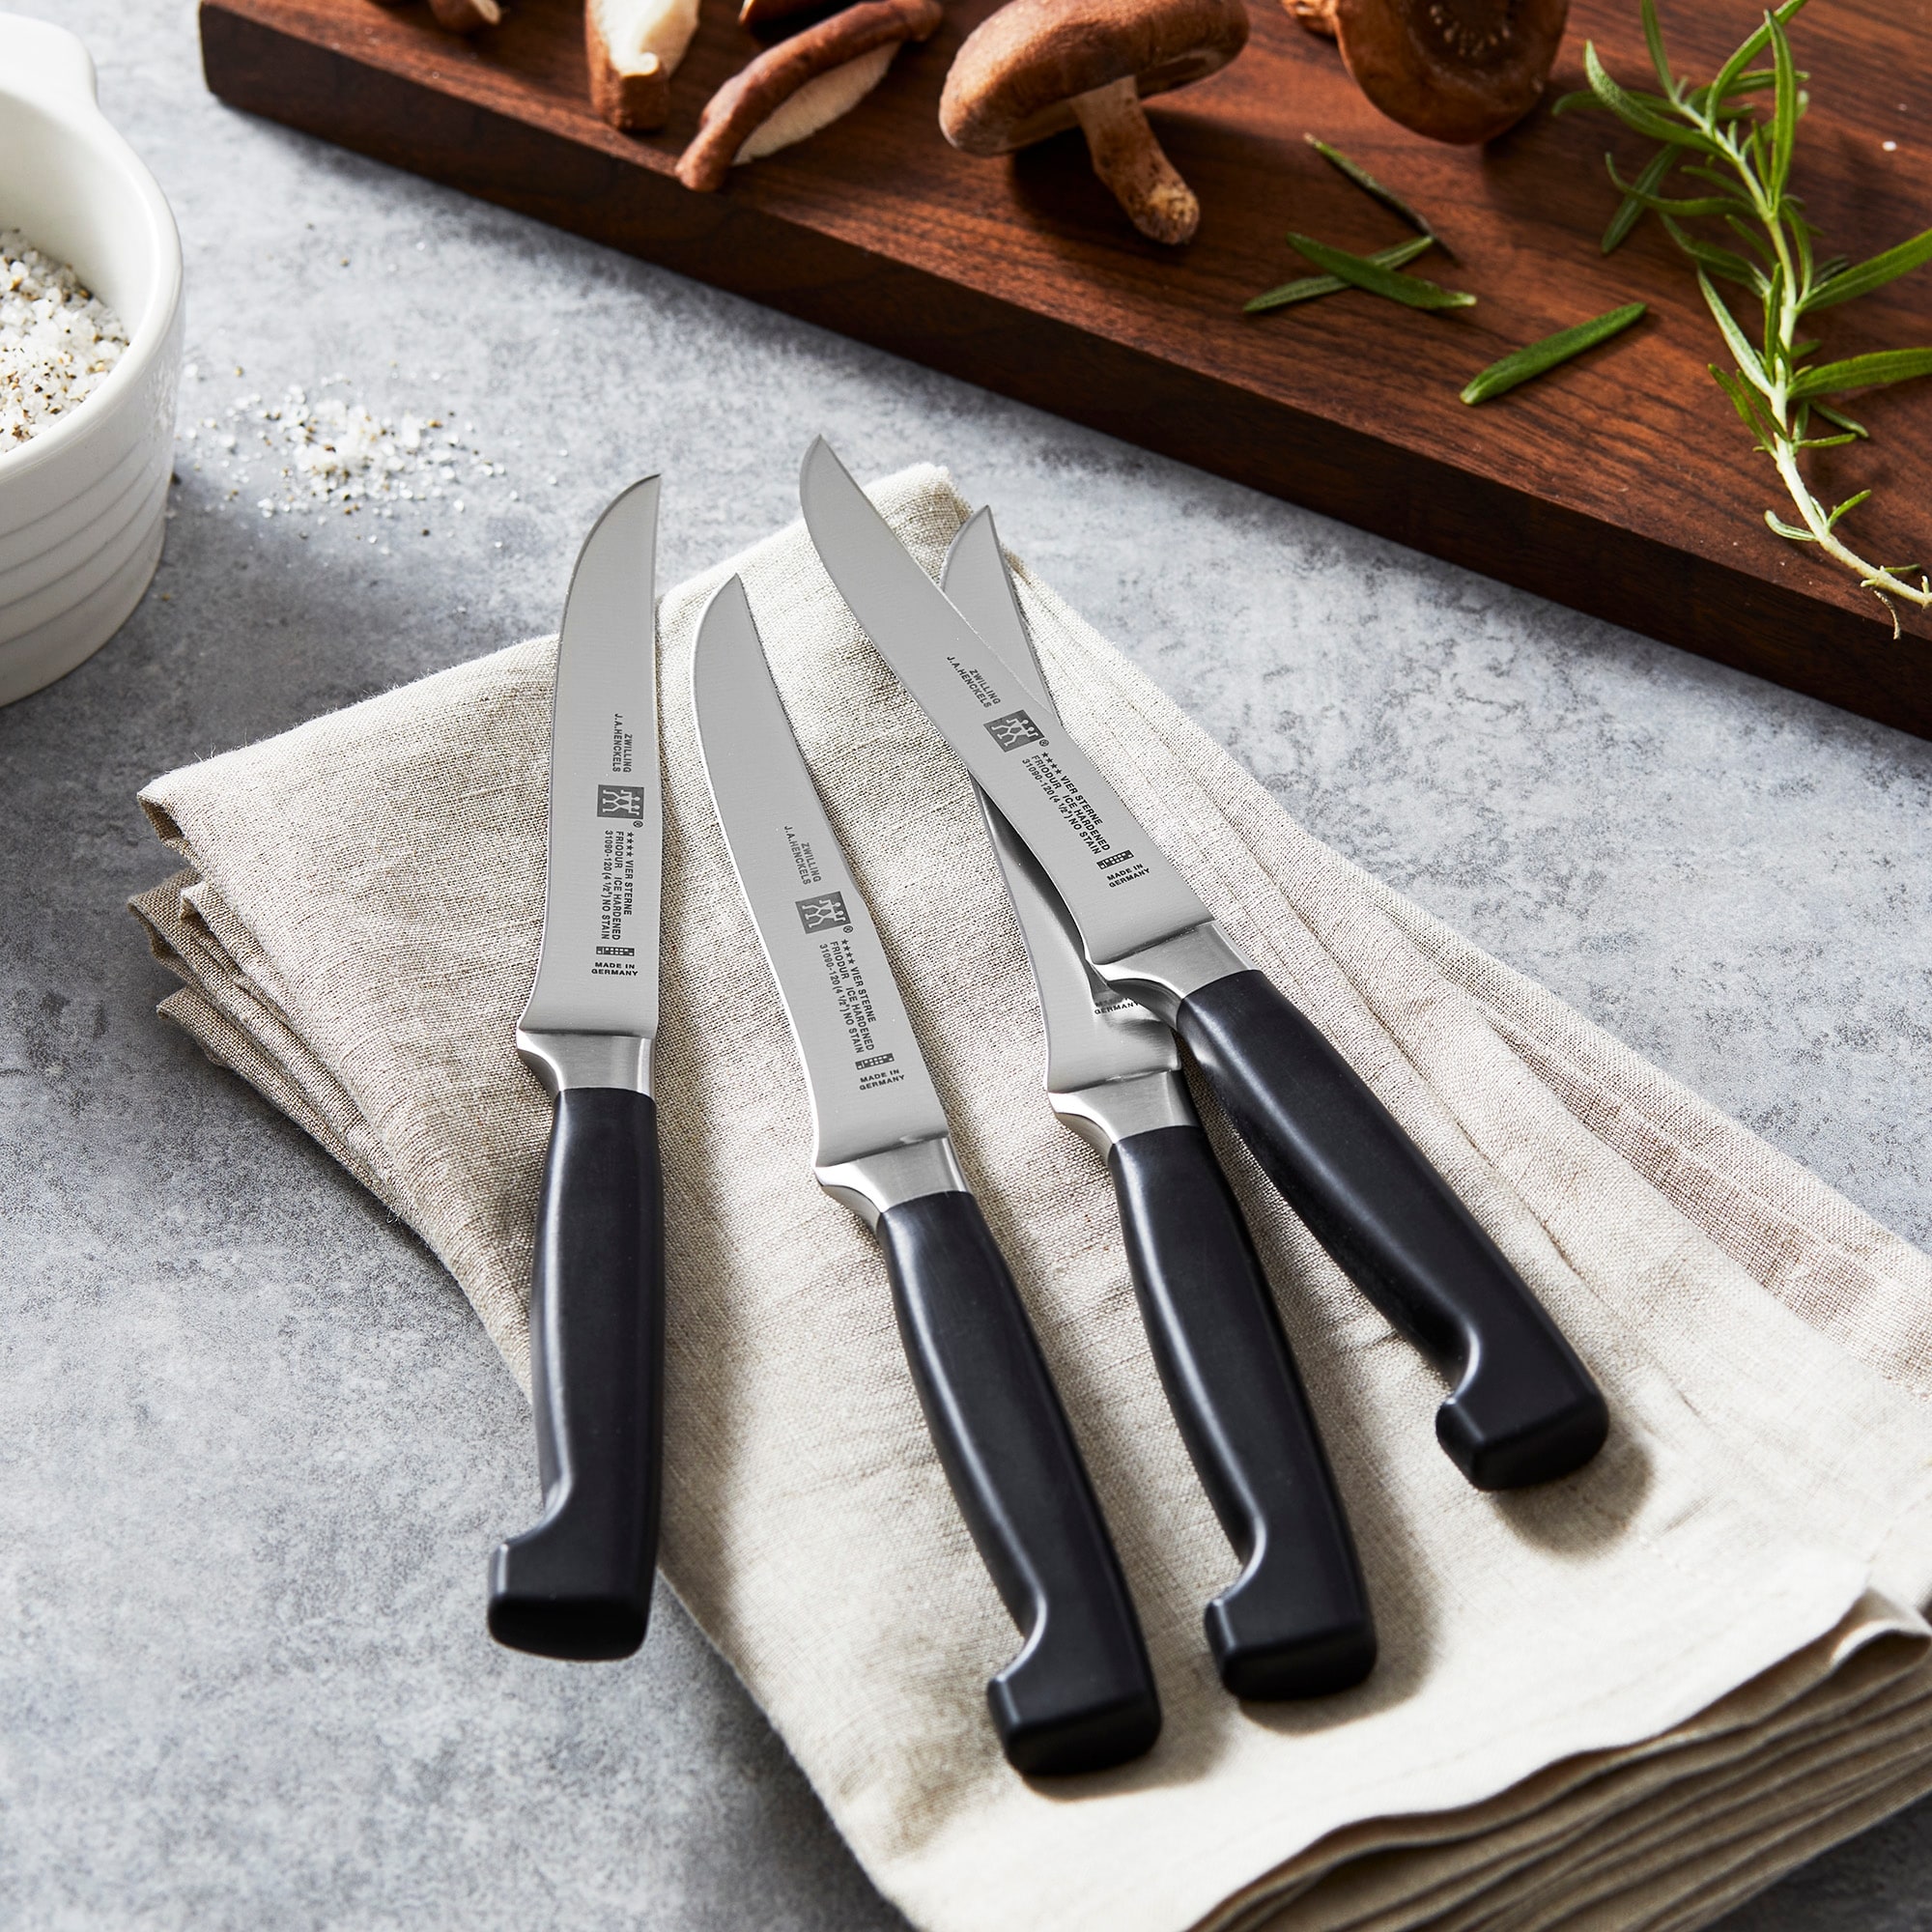 Ronco 4 Piece Steak Knife Set, Stainless-steel Serrated Blades